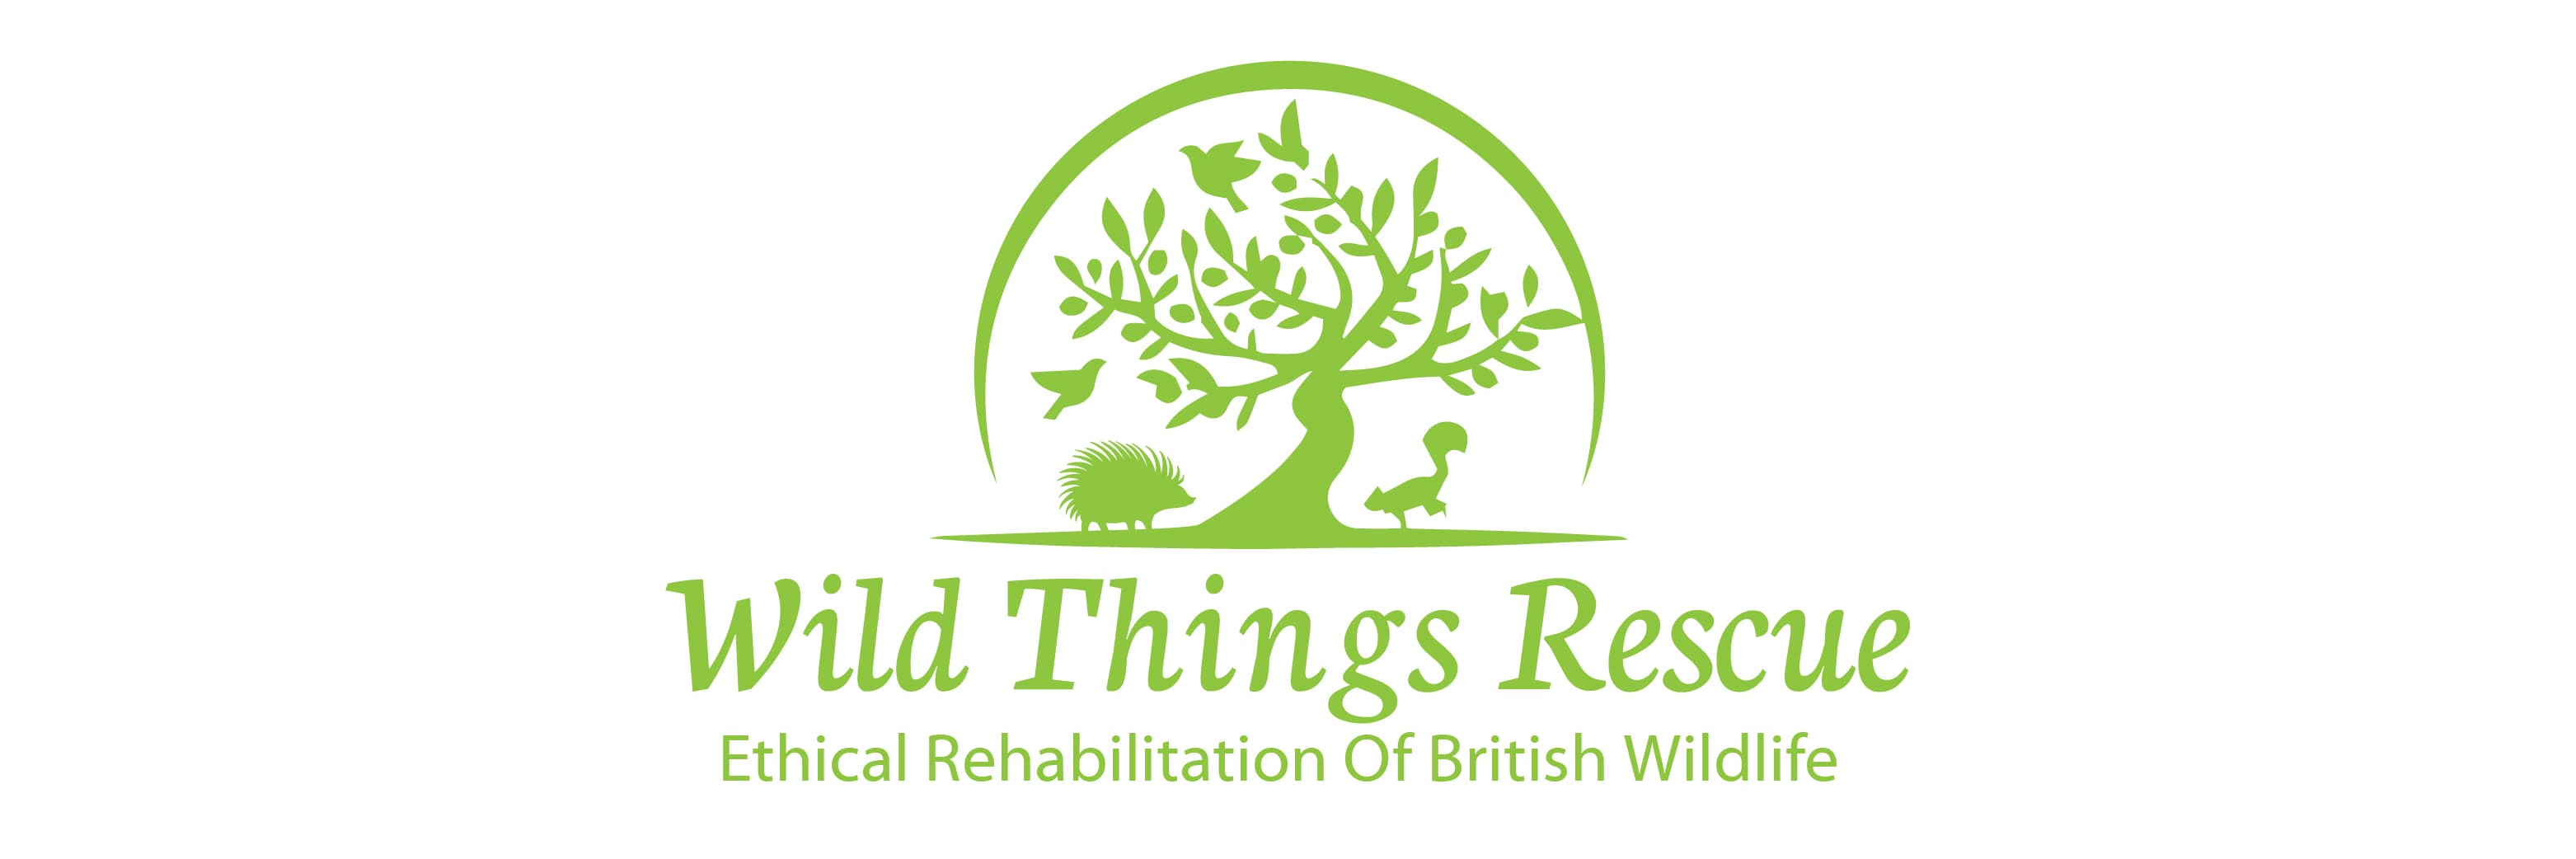 Wild Things Rescue C.I.C logo